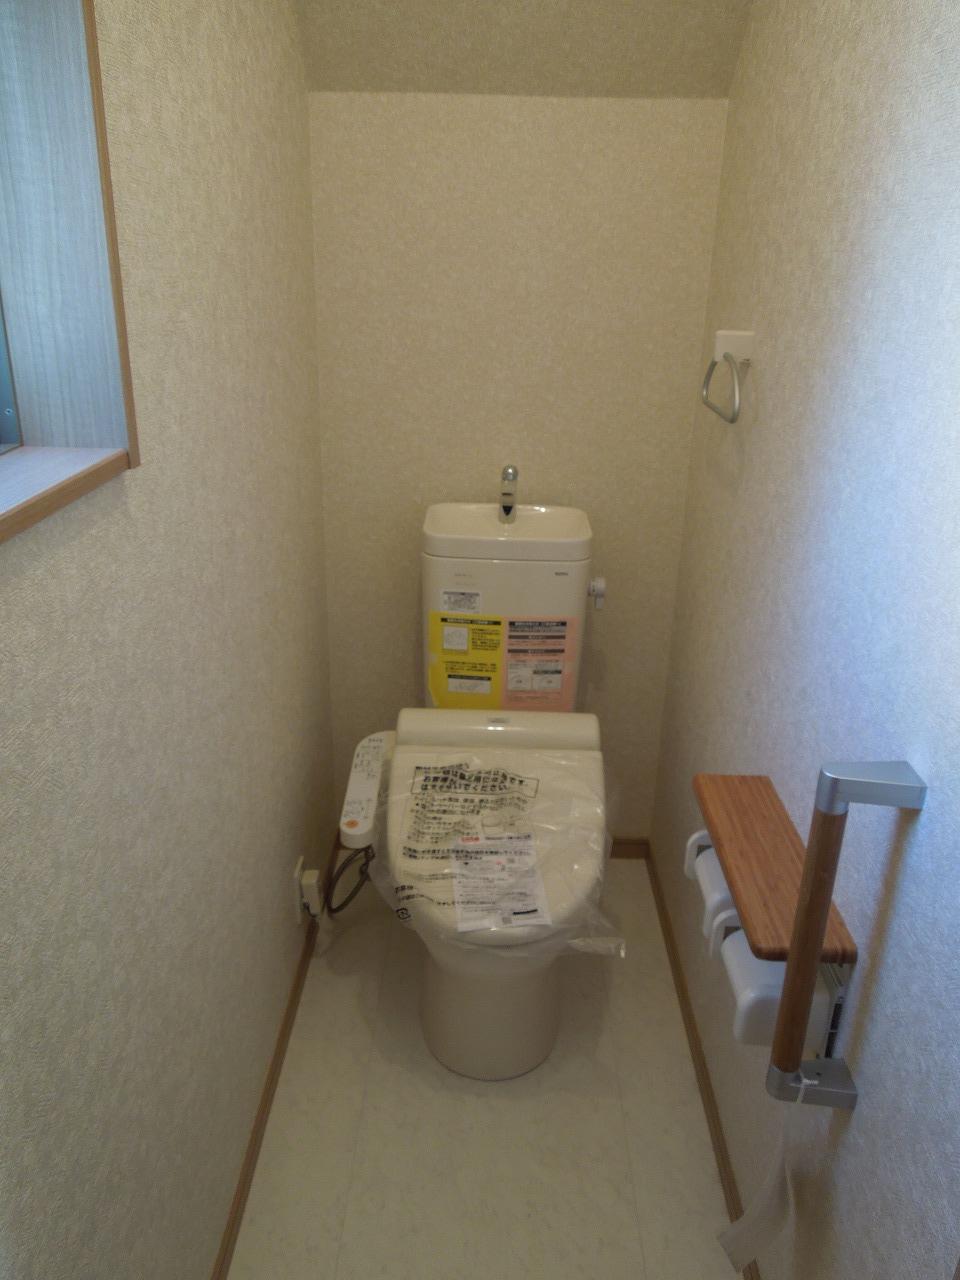 Toilet. Multi-functional with toilet